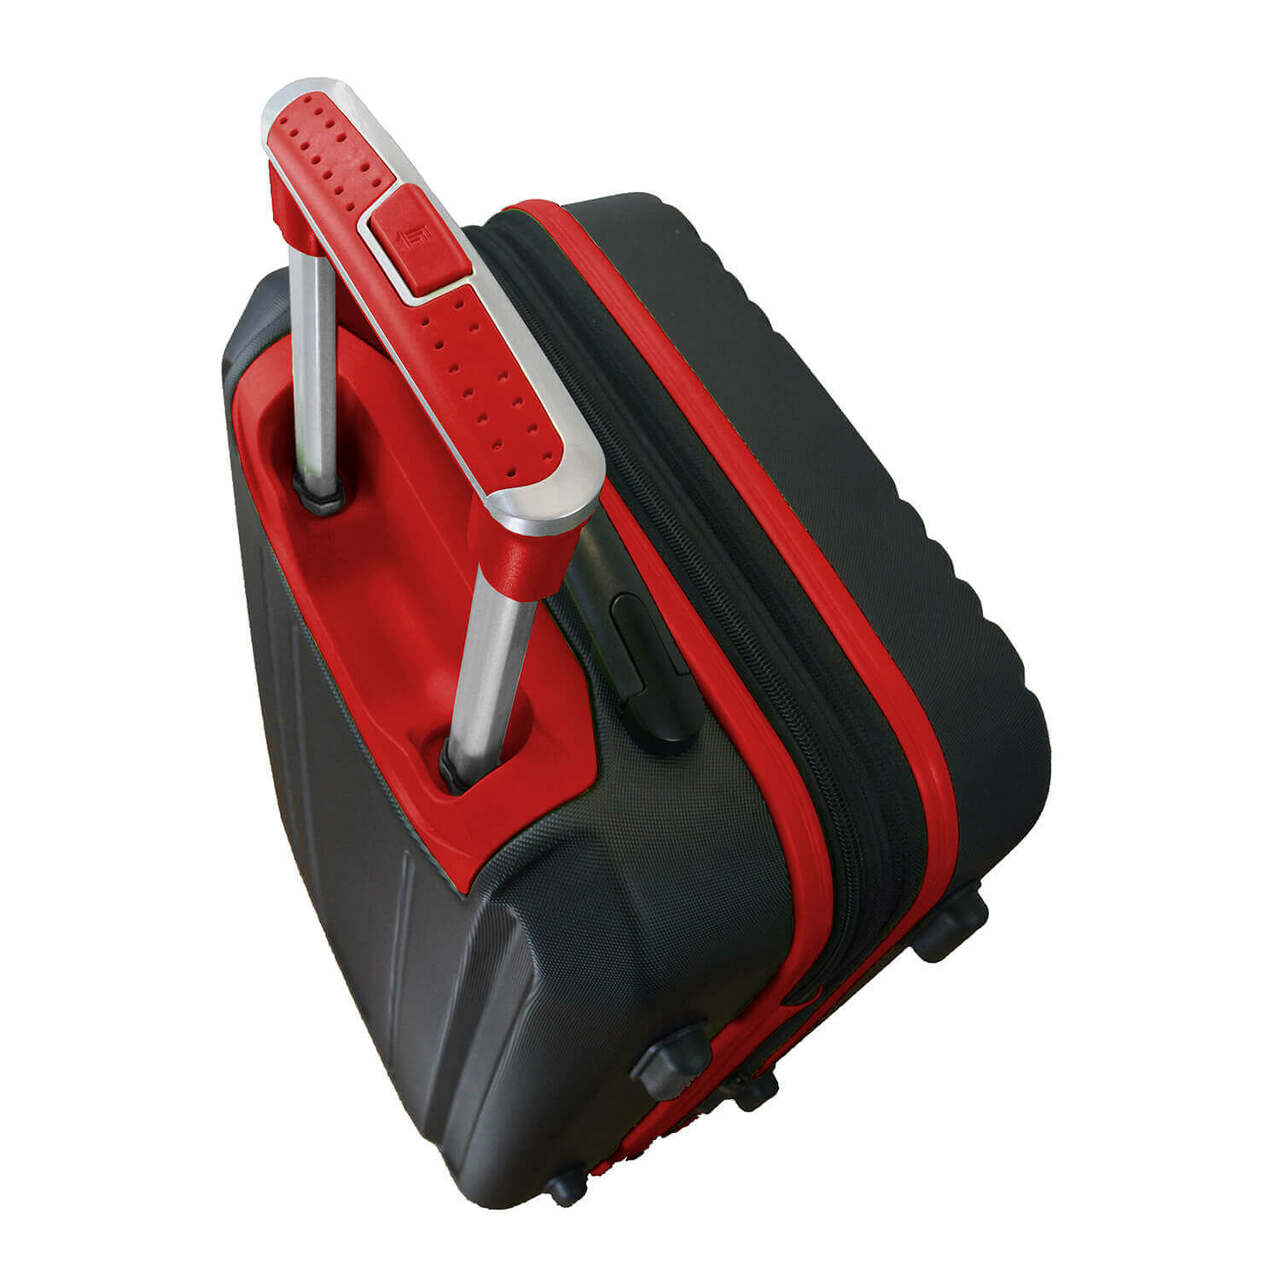 76ers Carry On Spinner Luggage | Philadelphia 76ers Hardcase Two-Tone Luggage Carry-on Spinner in Red